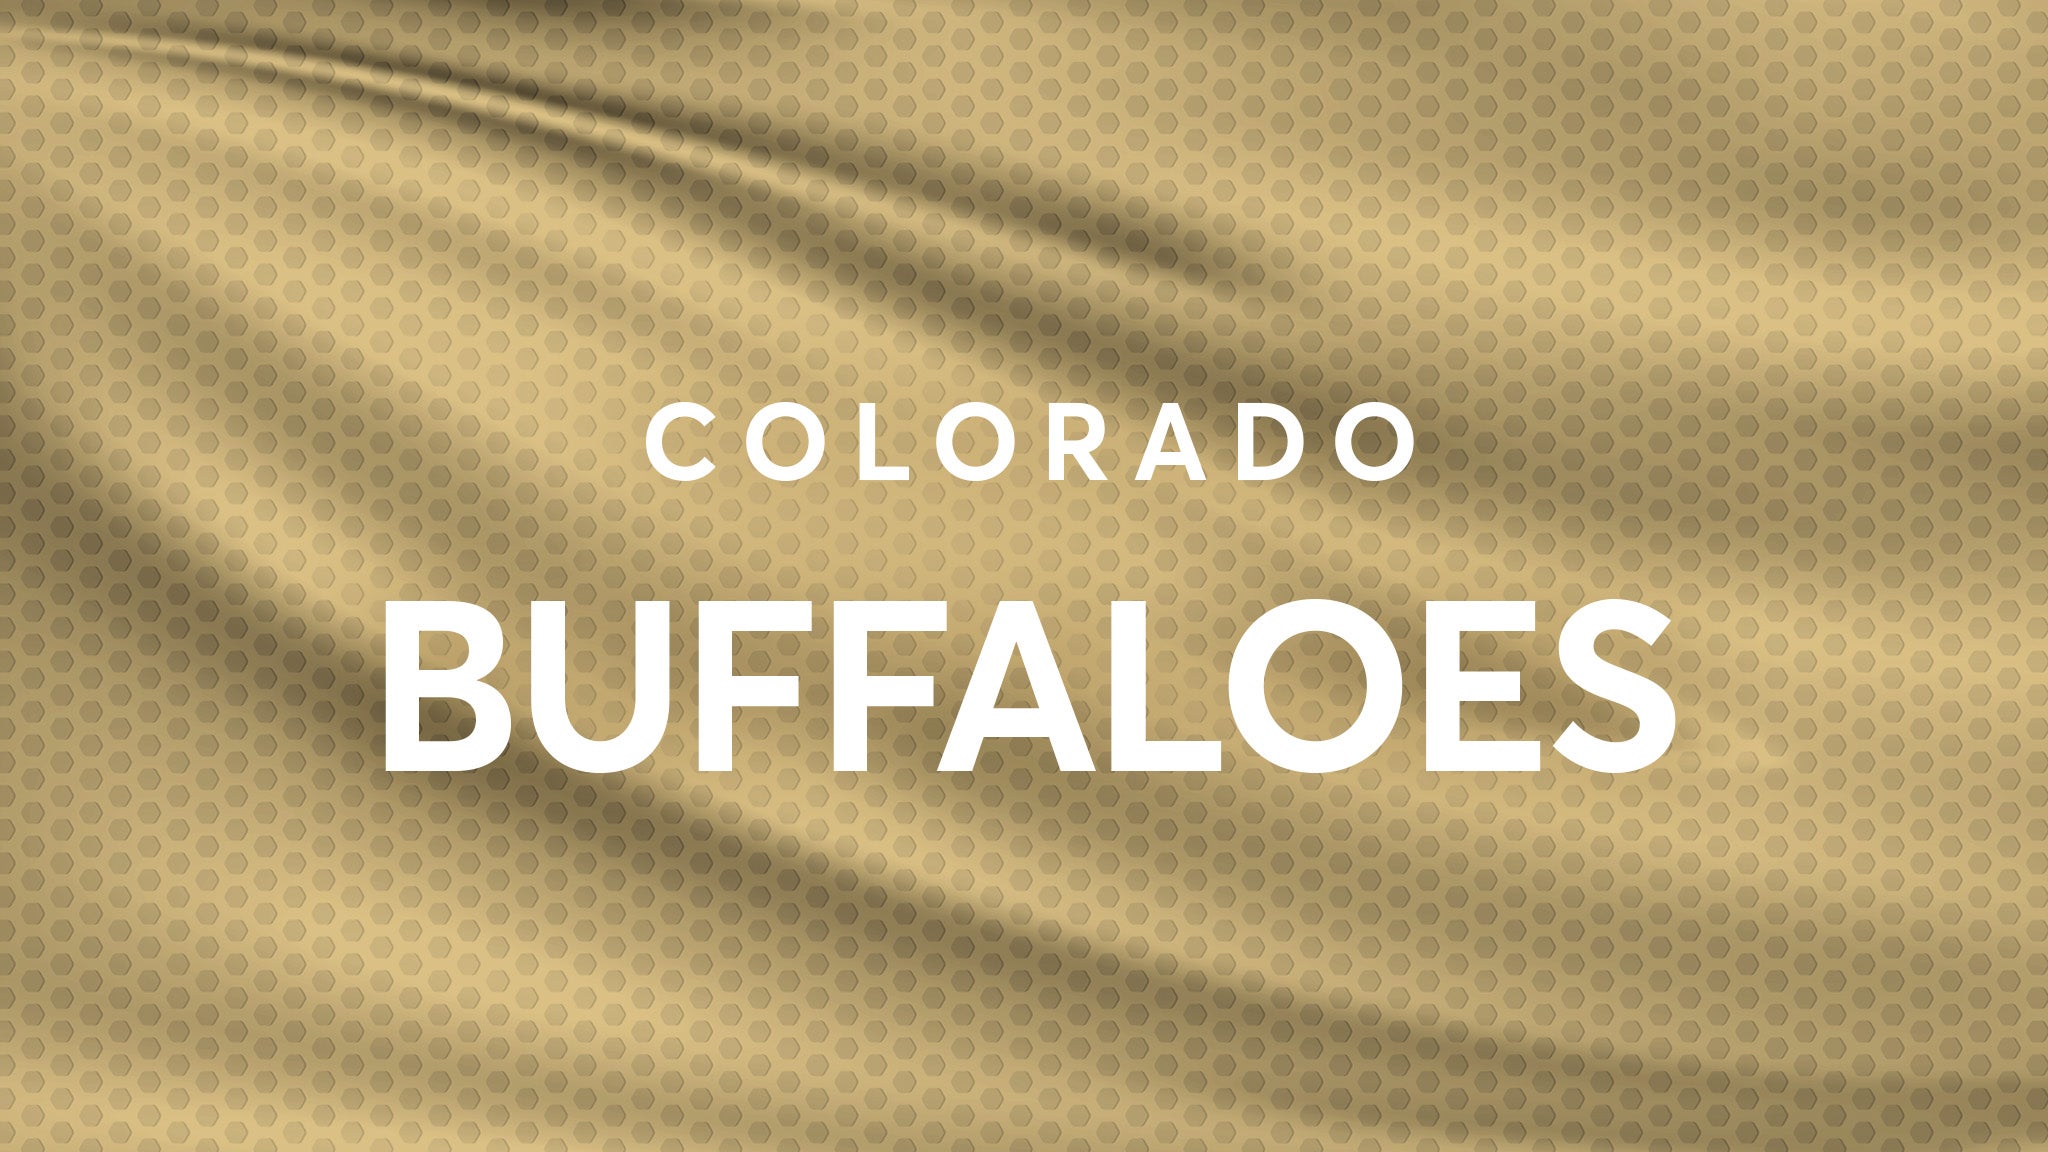 Colorado Buffaloes Football vs. Kansas State Wildcats Football